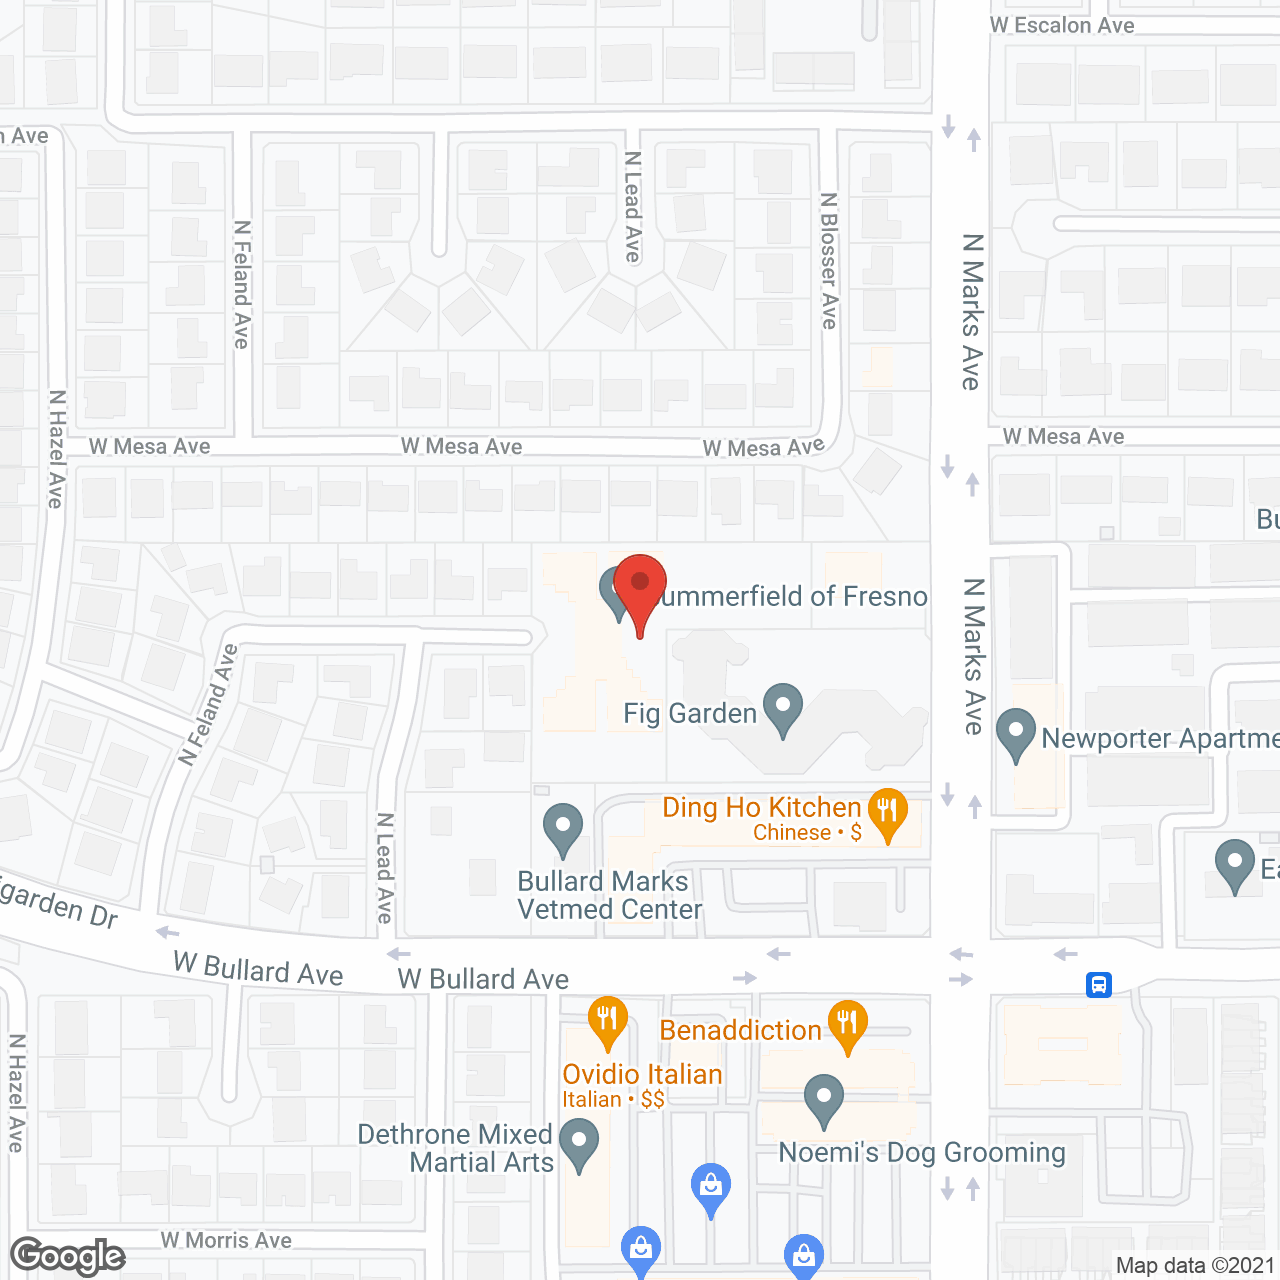 Summerfield of Fresno in google map